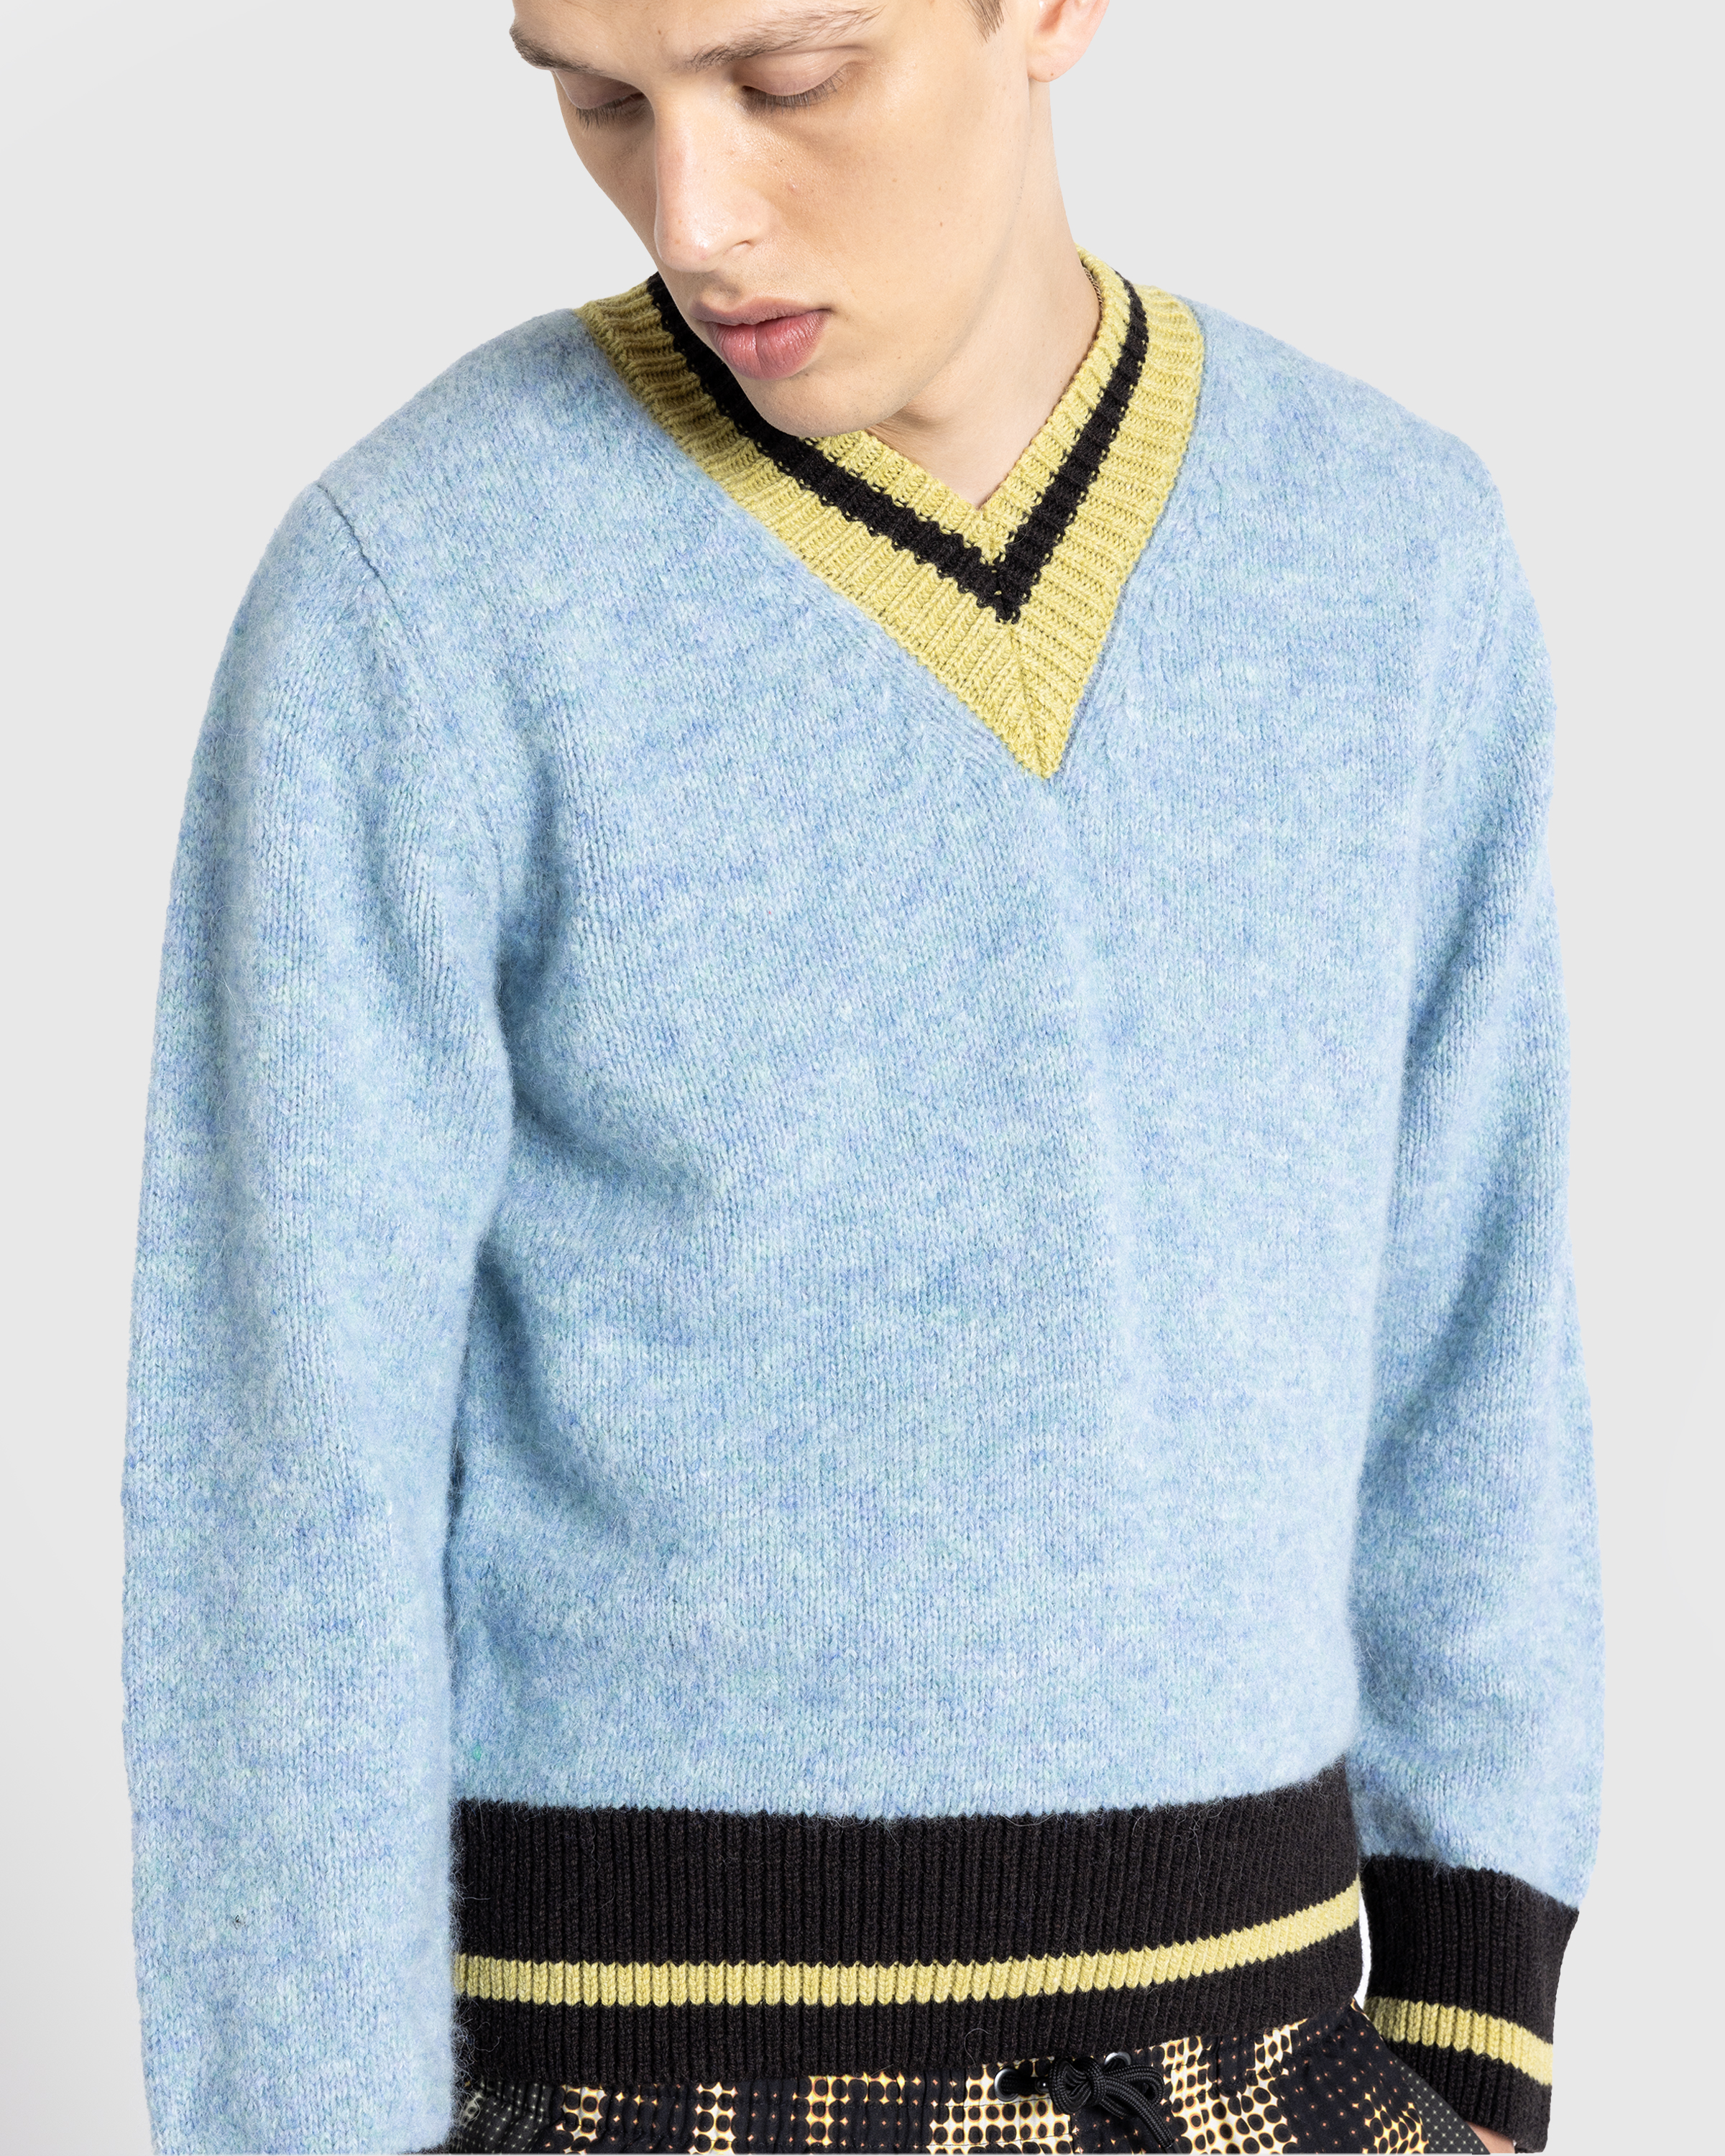 Dries van Noten – Moon Sweater Light Blue - Crewnecks - Blue - Image 5